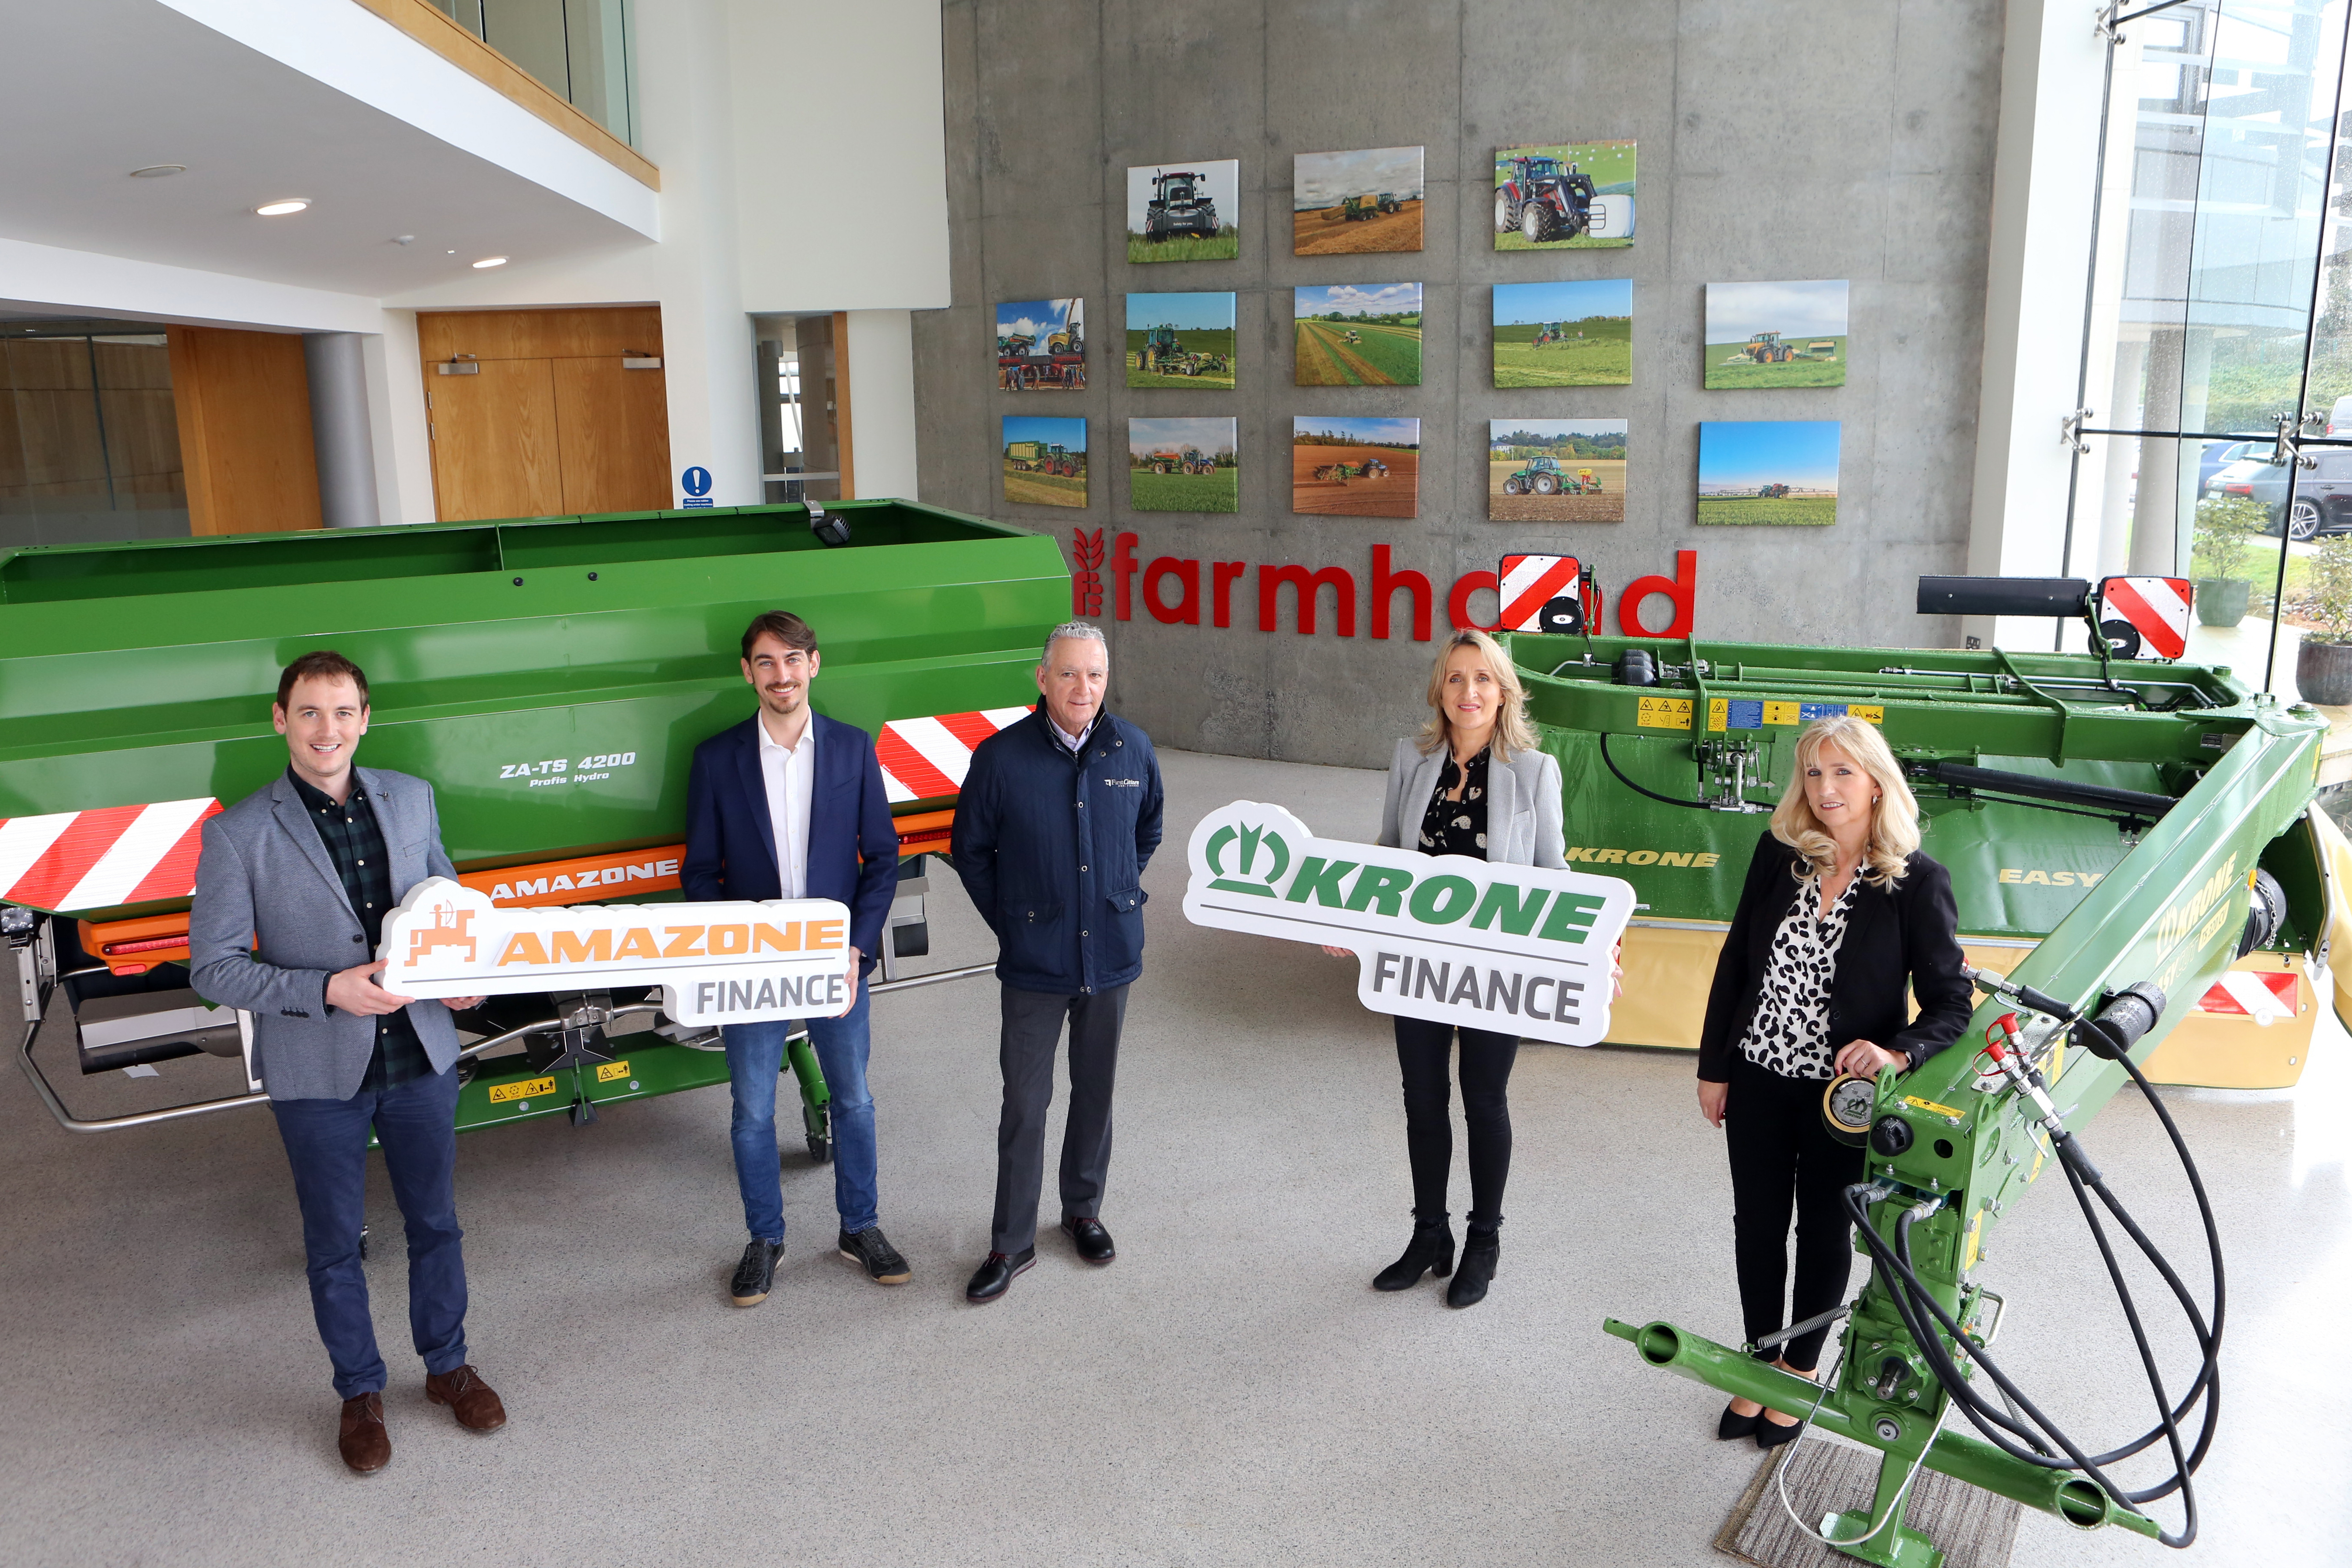 Farmhand Ltd. announces new strategic finance partnership with First Citizen Agri Finance